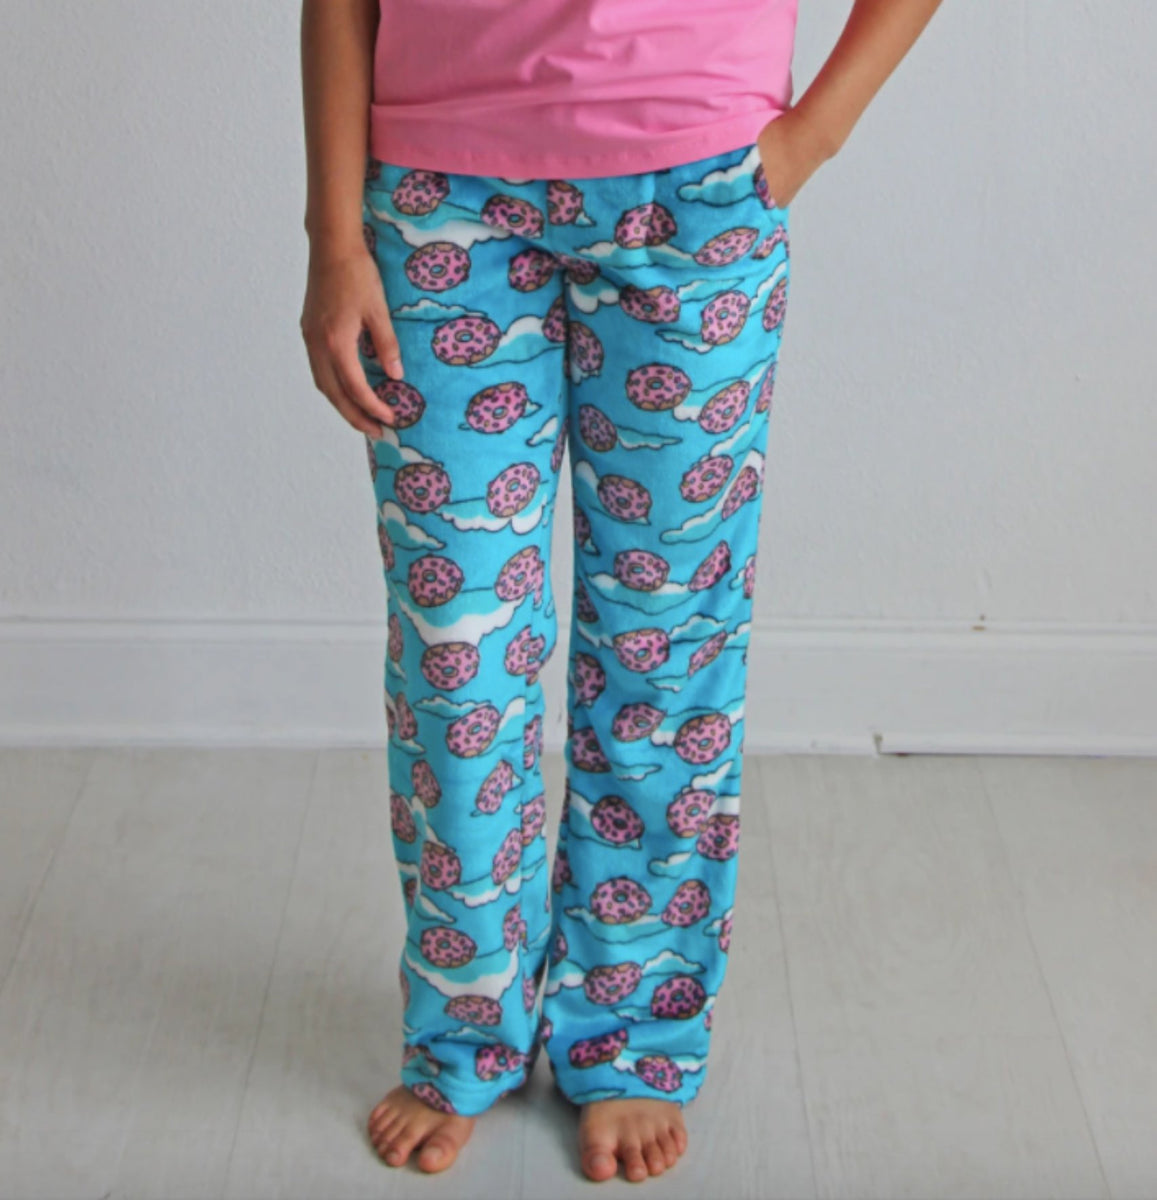 Candy Pink Girls Fleece Pajama Pants in Pug Dog Pattern